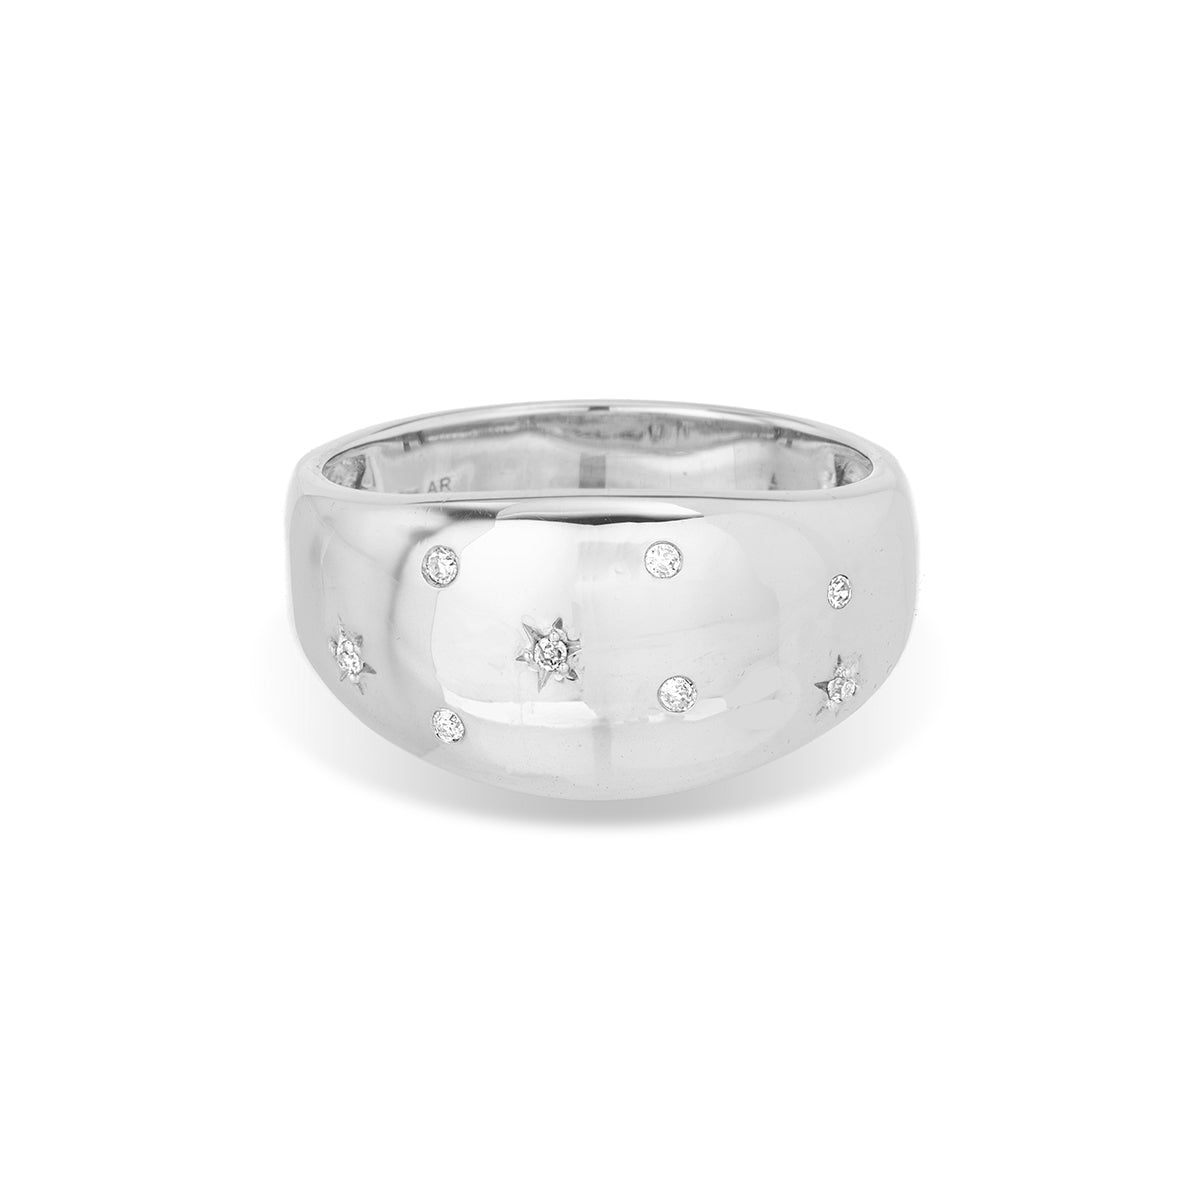 Celestial Diamonds Large Half Dome Ring in Sterling Silver